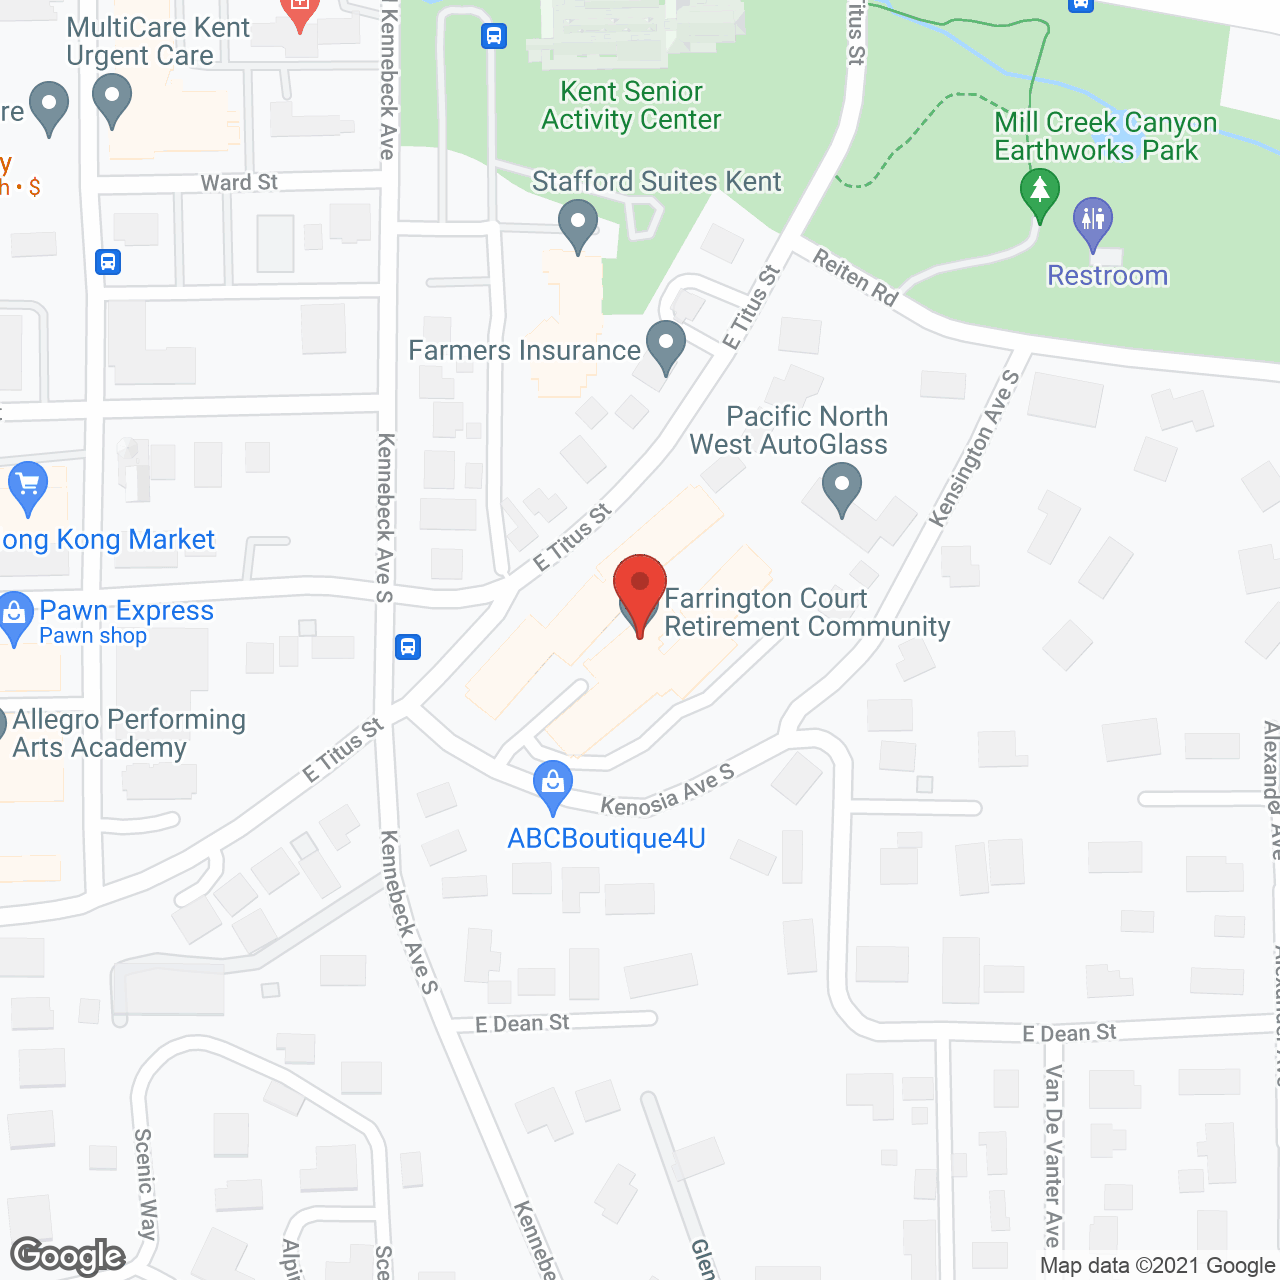 Farrington Court in google map